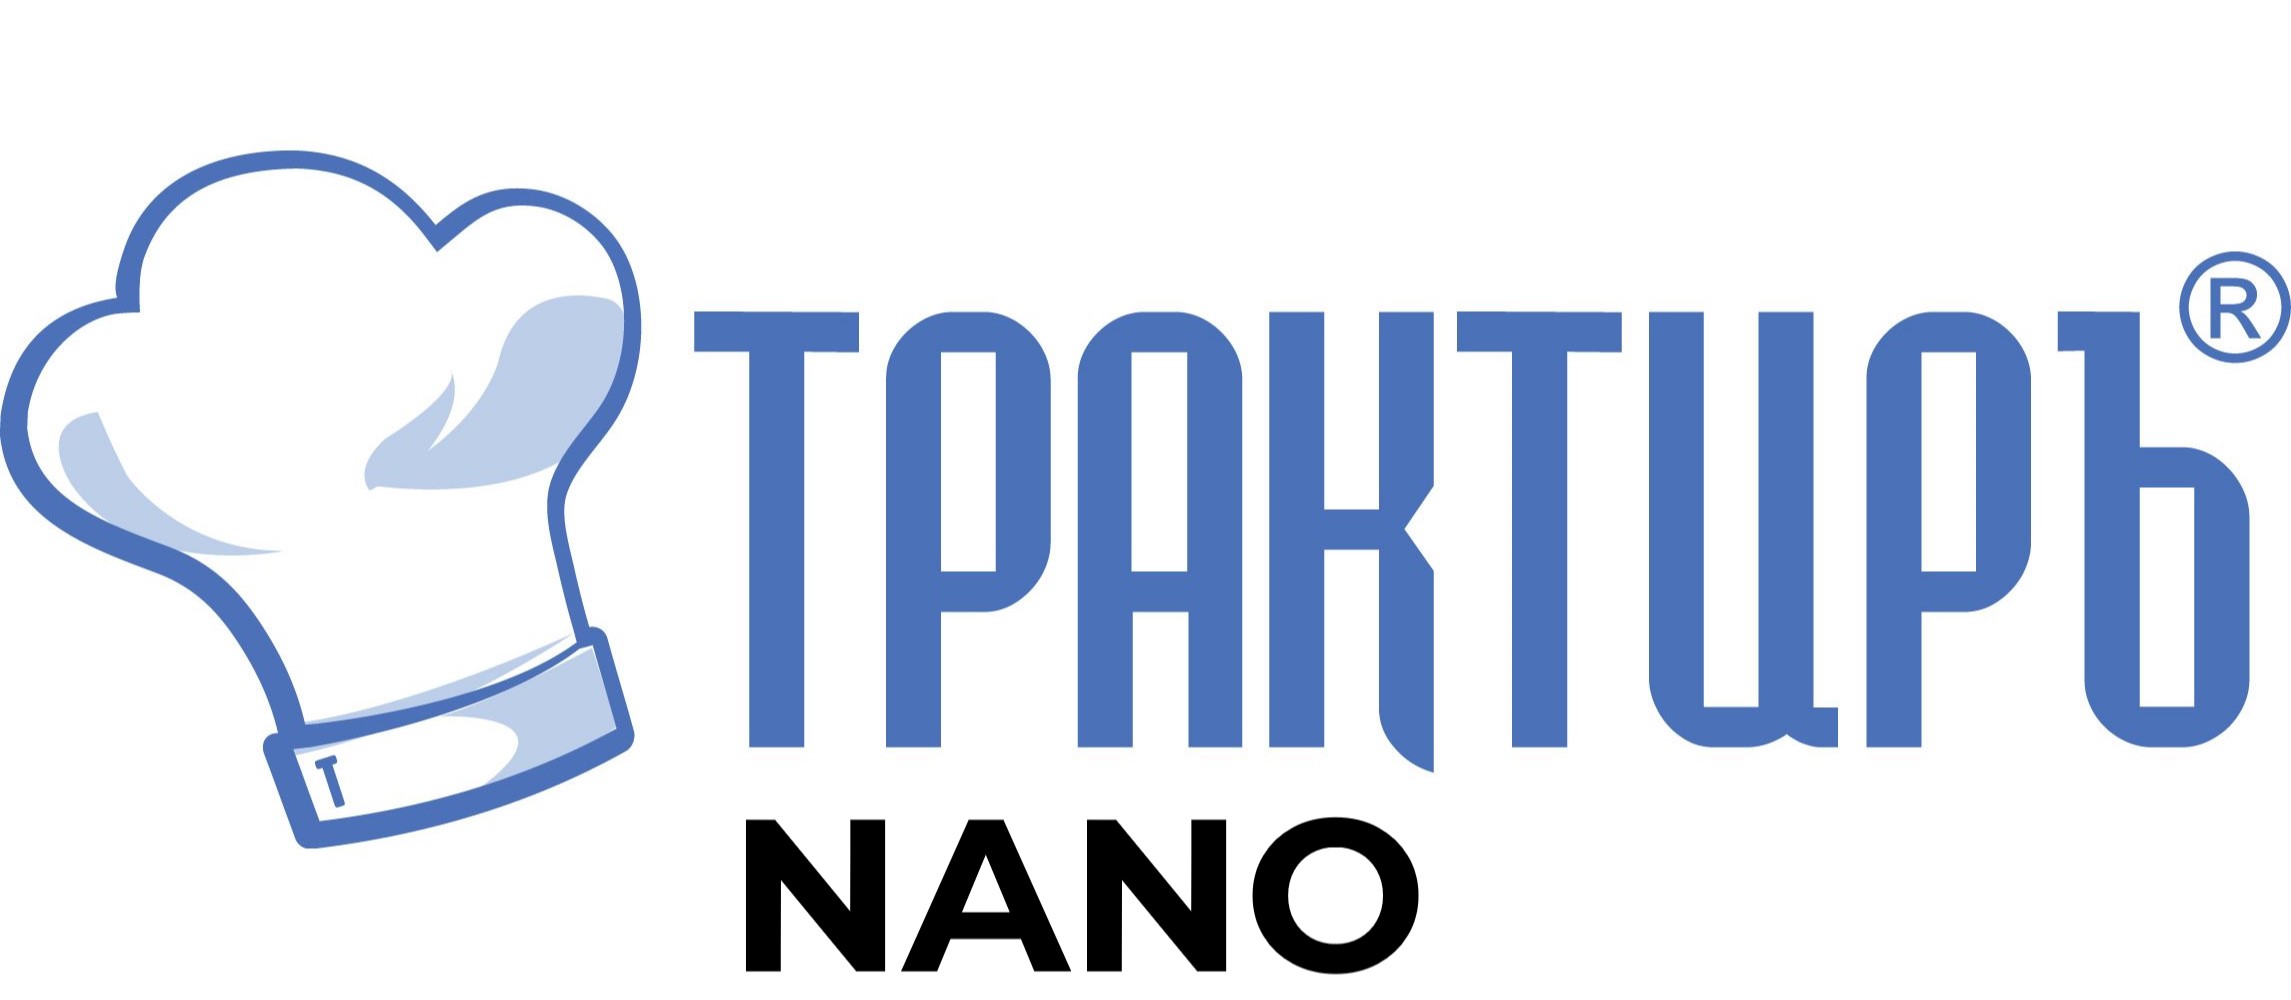 Конфигурация Трактиръ: Nano (Основная поставка) в Петропавловске-Камчатском